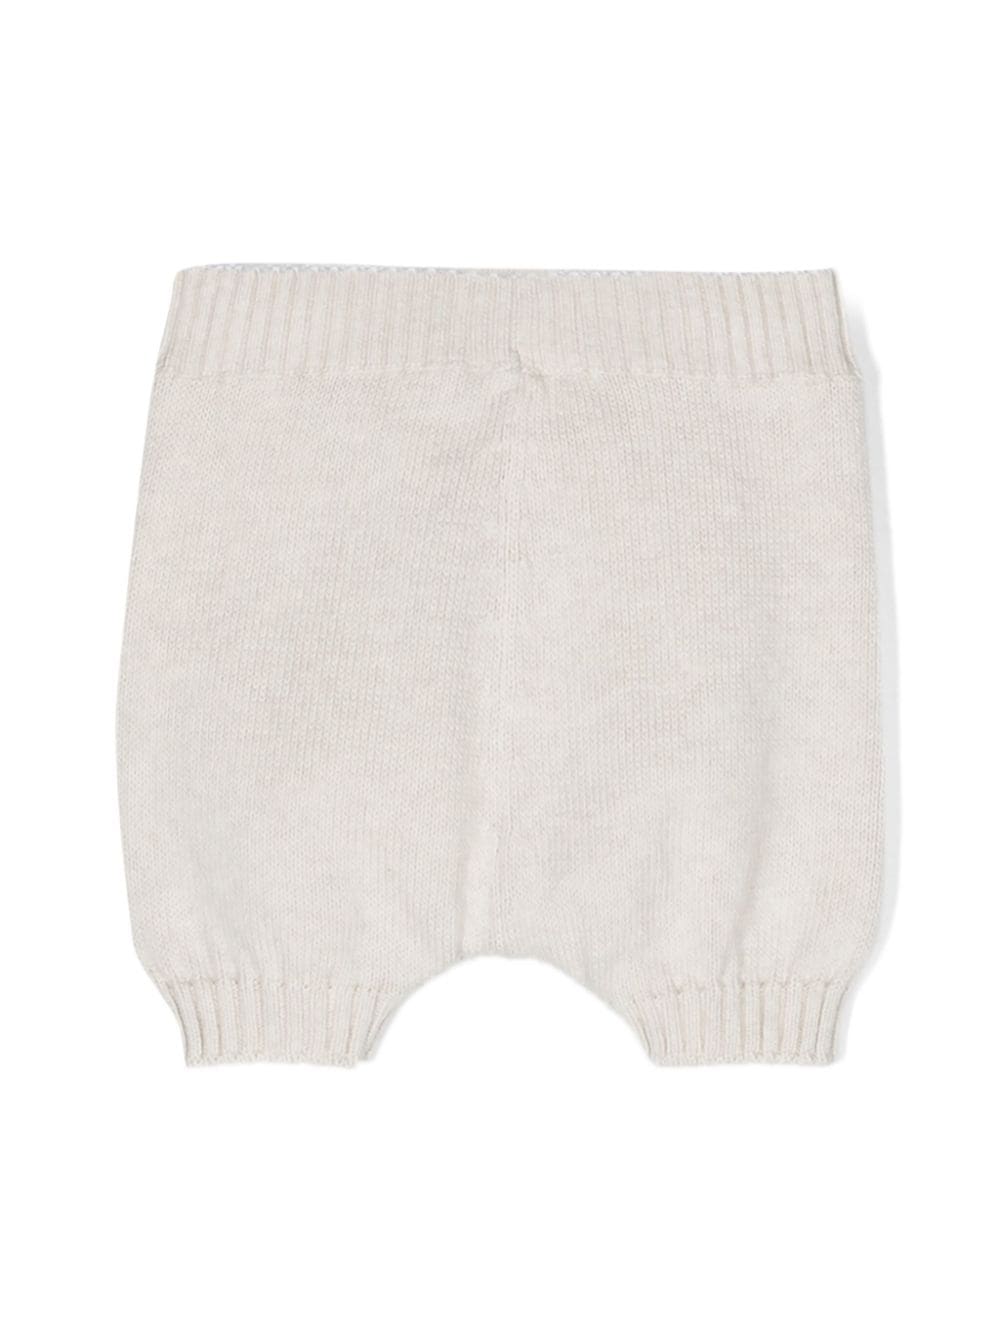 Shorts beige neonato unisex